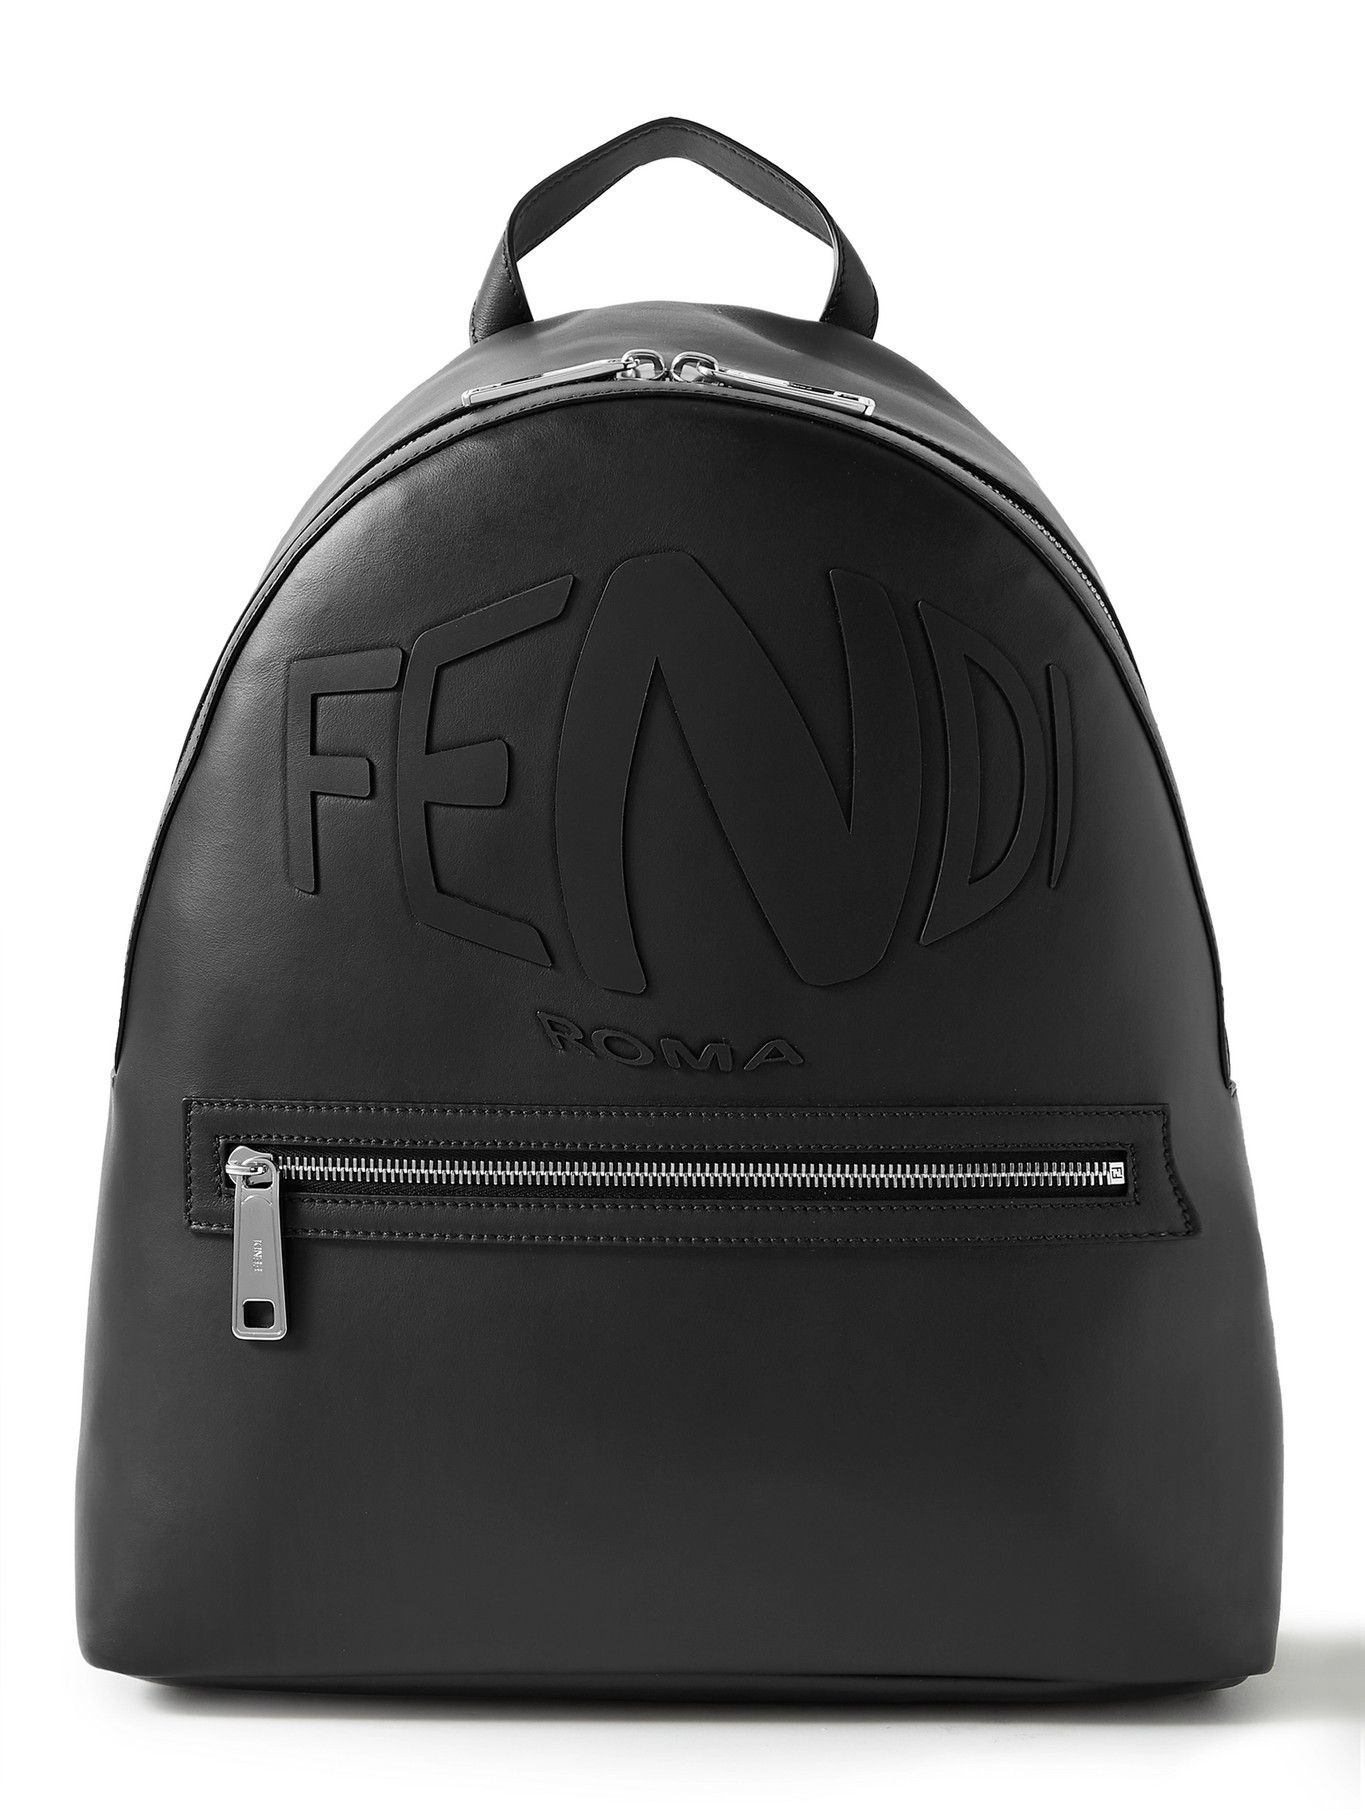 Fendi - Logo-Embossed Leather and Mesh Backpack Fendi